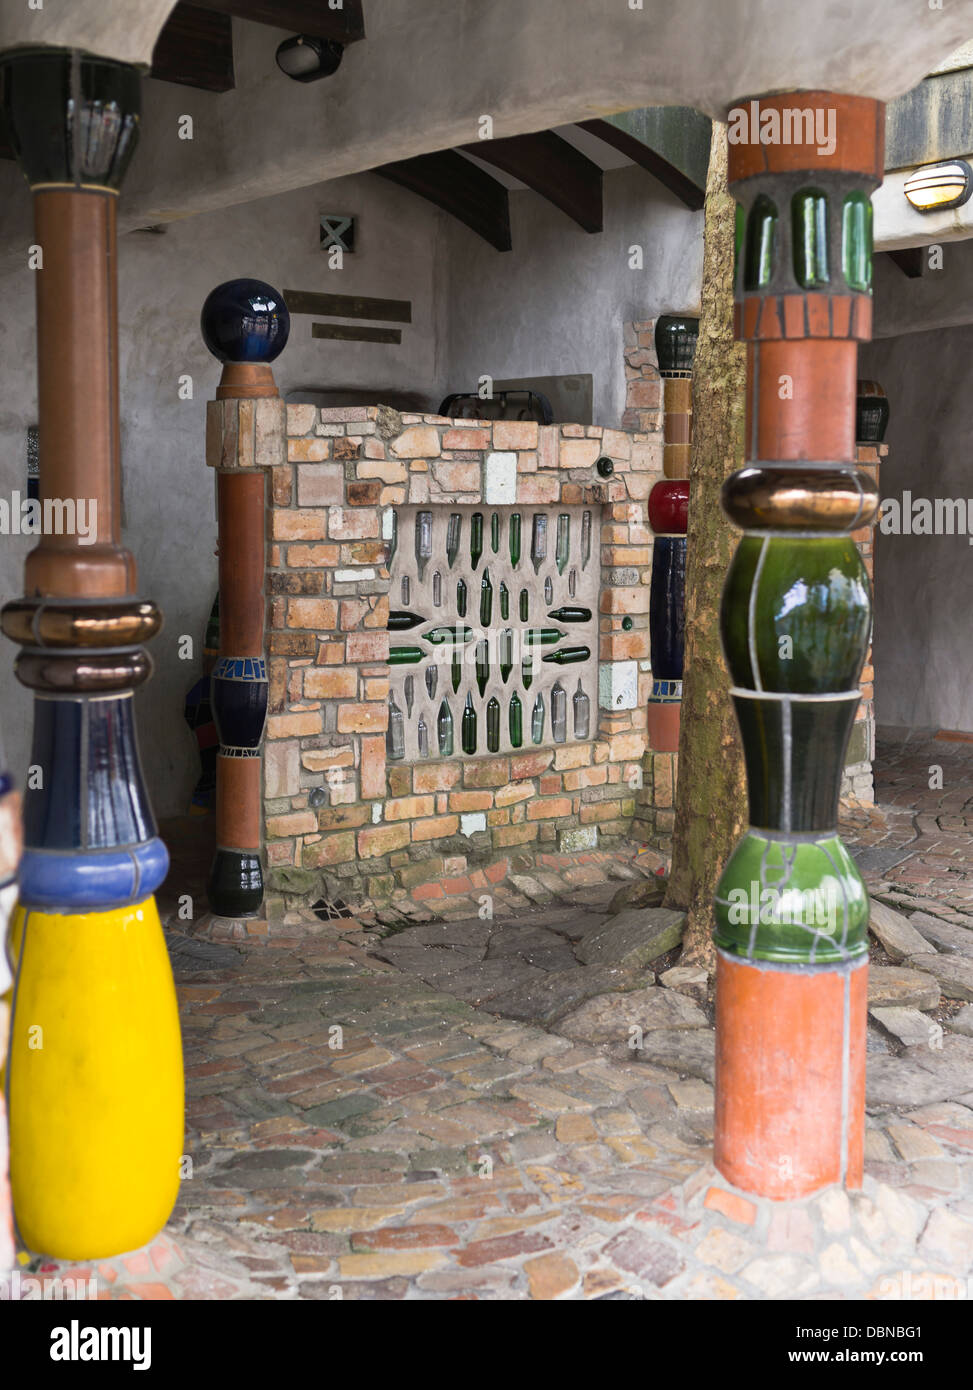 Dh KAWAKAWA NUEVA ZELANDIA Hundertwasser aseos diseñada por Friedensreich Hundertwasser wc Foto de stock